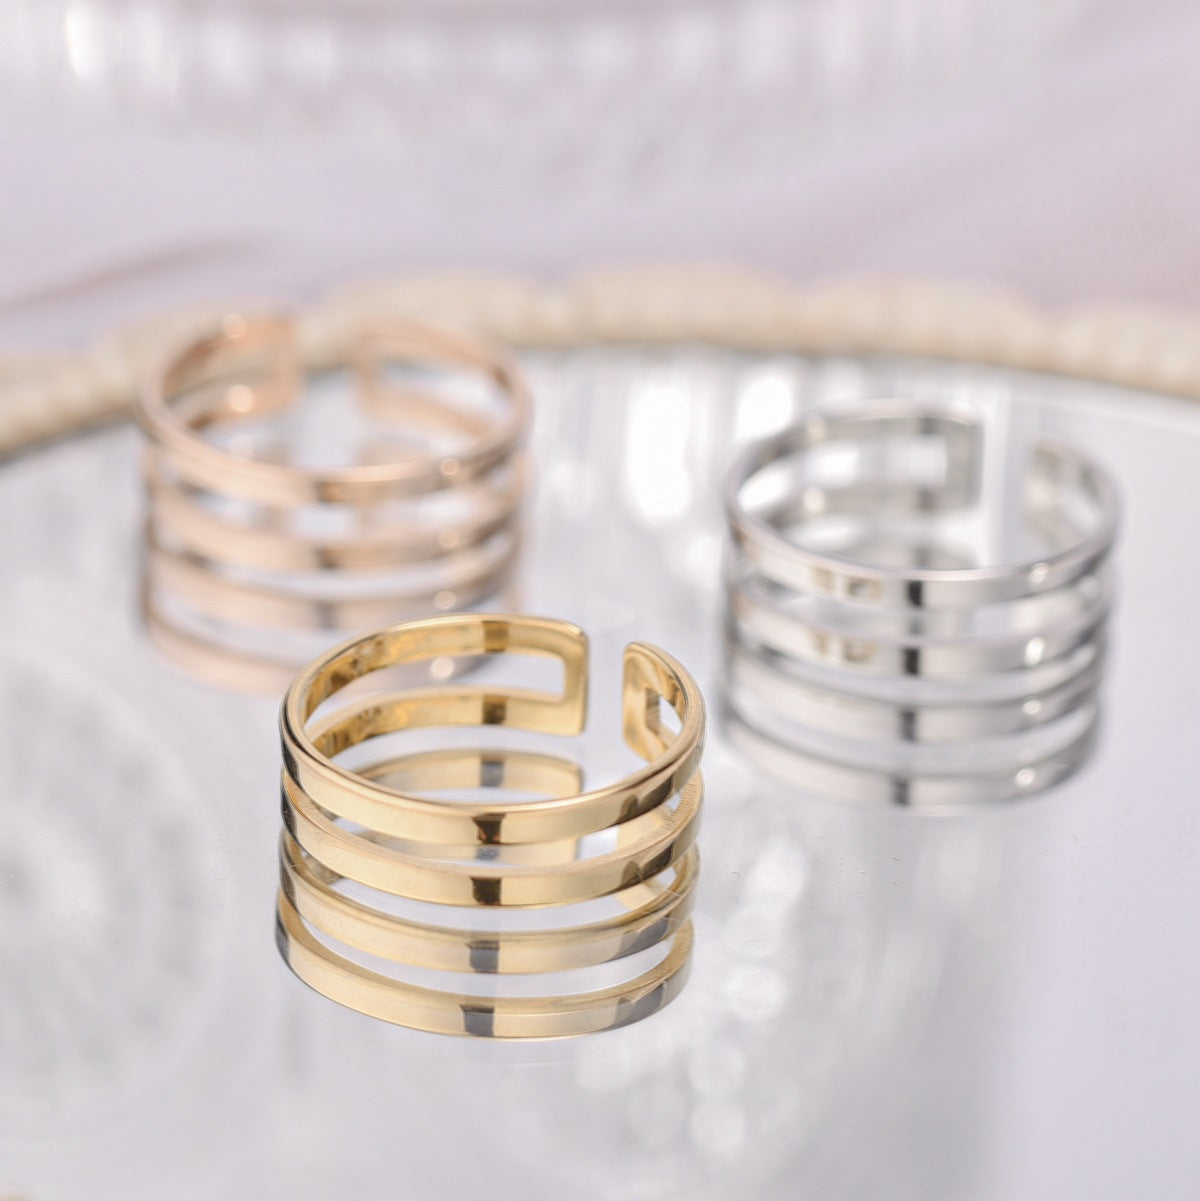 Wholesale Titanium Steel Ring Simple Couple Ring Jewelry